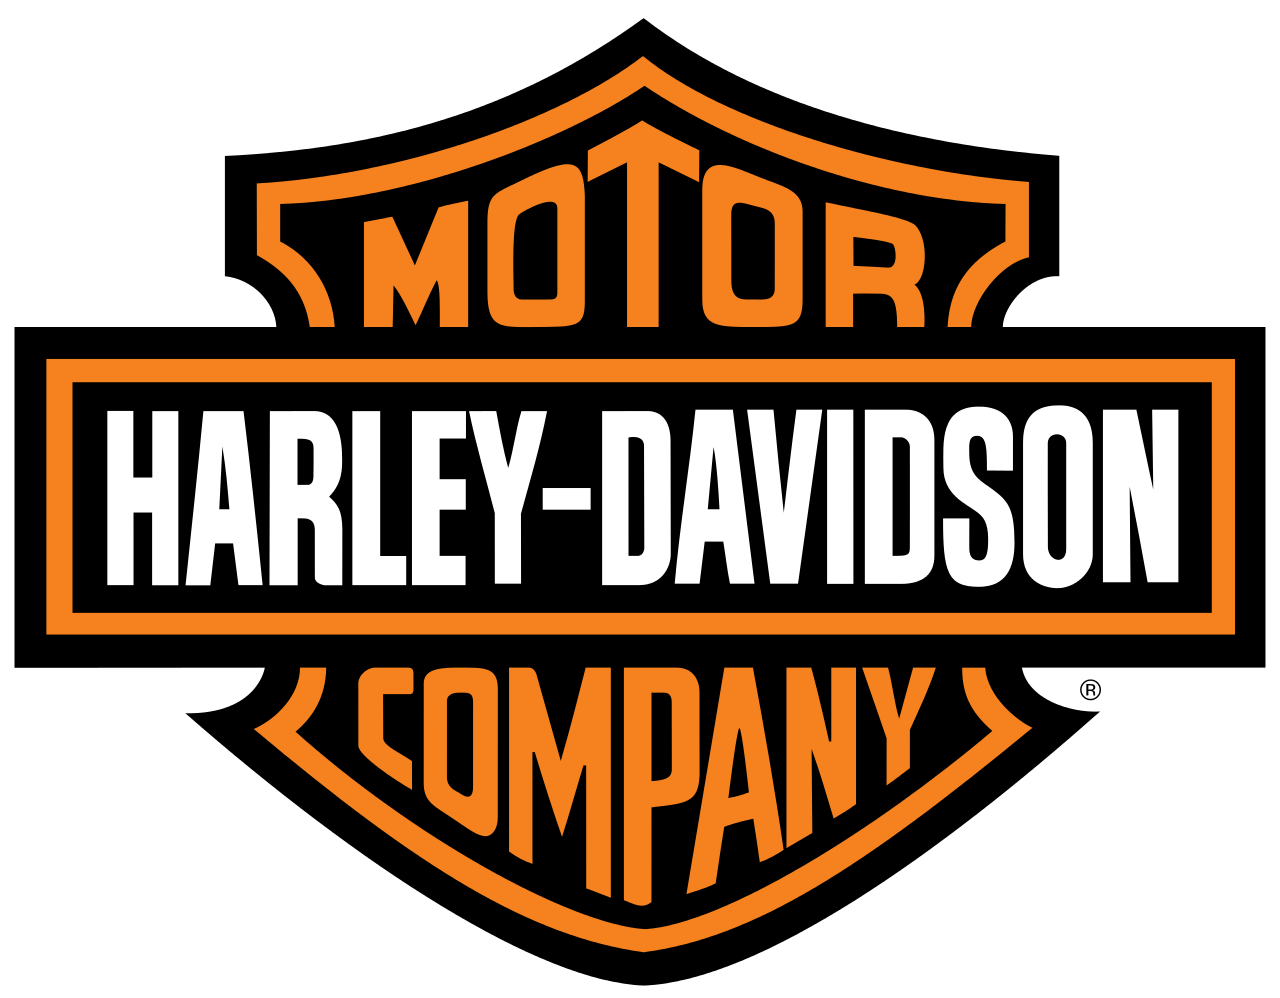 Harley-Davidson India - Wikipedia, the free encyclopedia